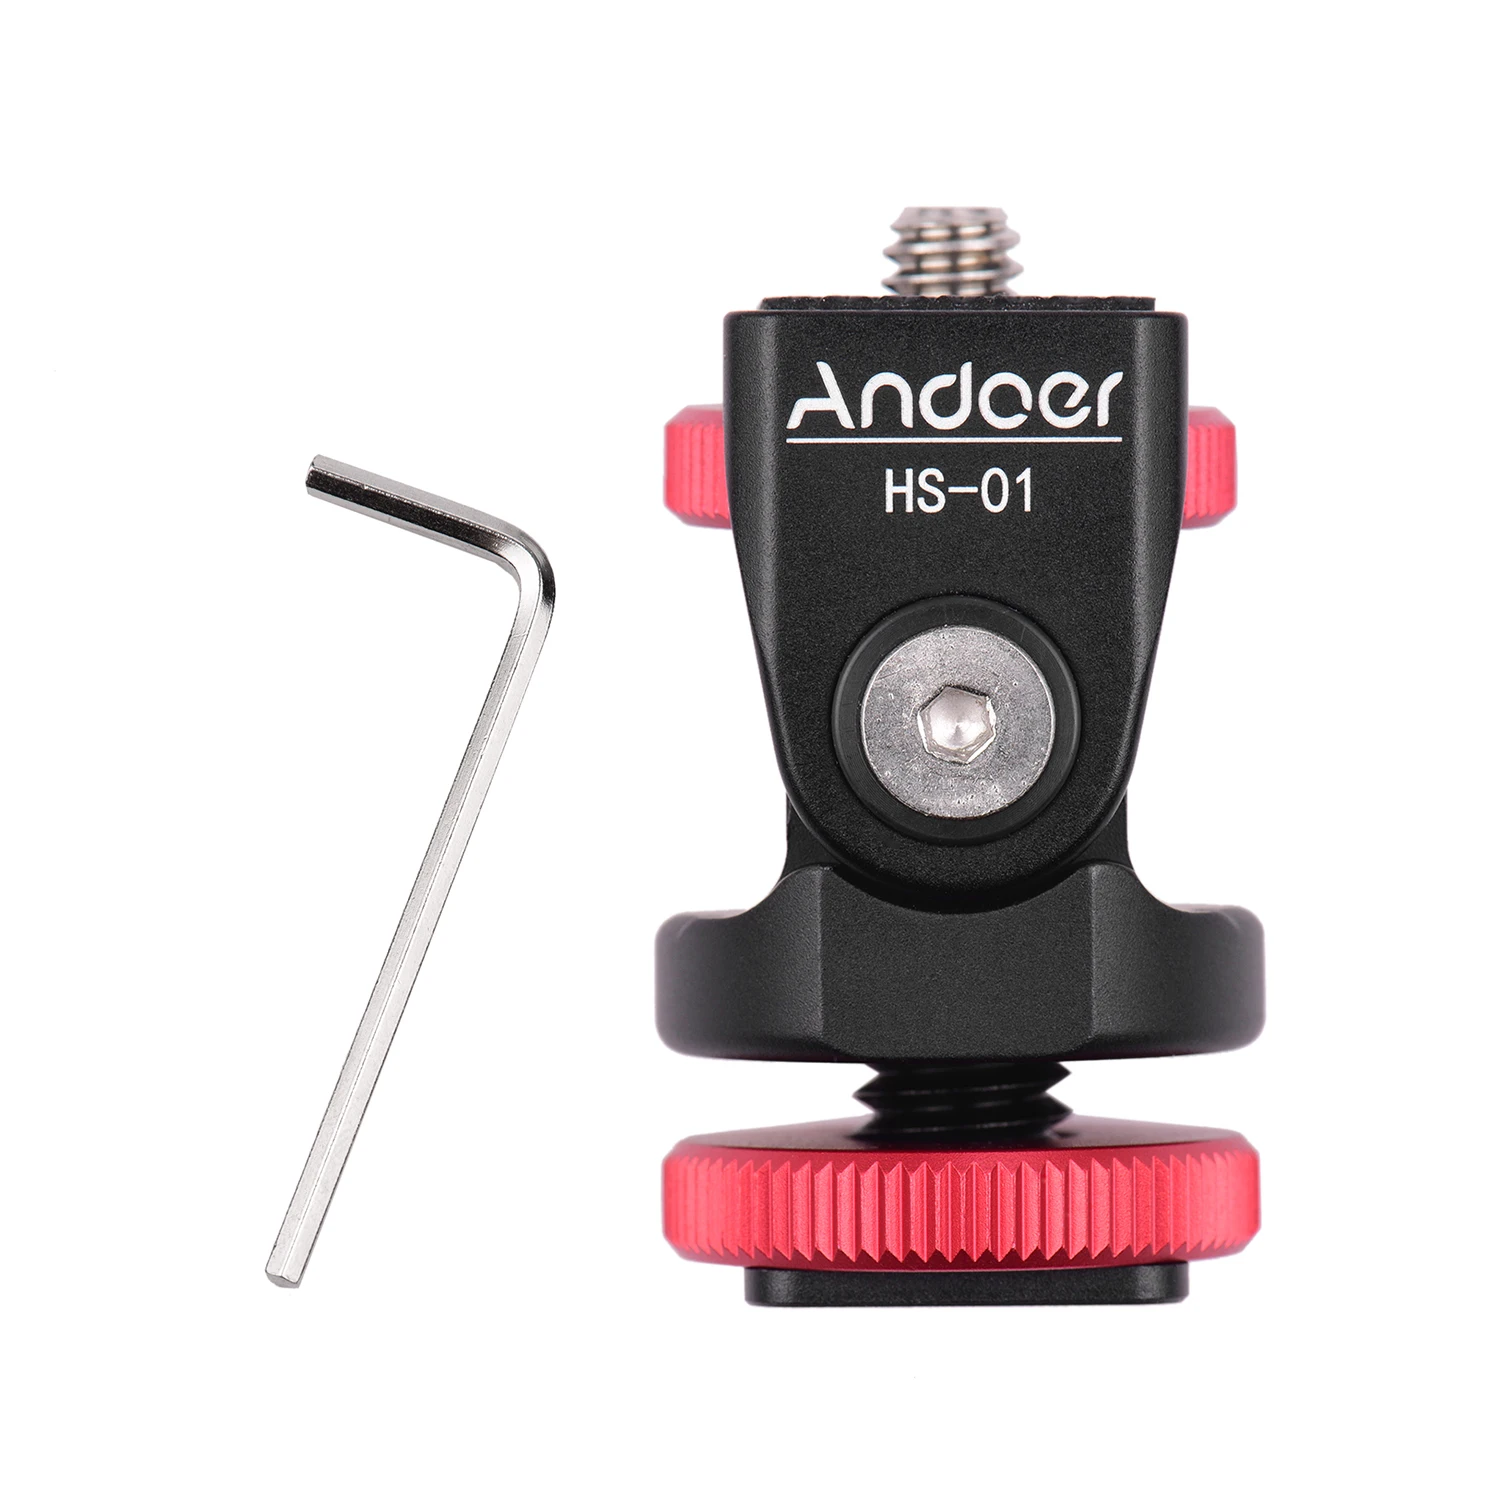 Andoer HS-01 Cold Shoe Mount Adapter Bracket Holder Aluminum Alloy with 1/4 Inch Screw for LED Light Video Monitor DSLR Camera